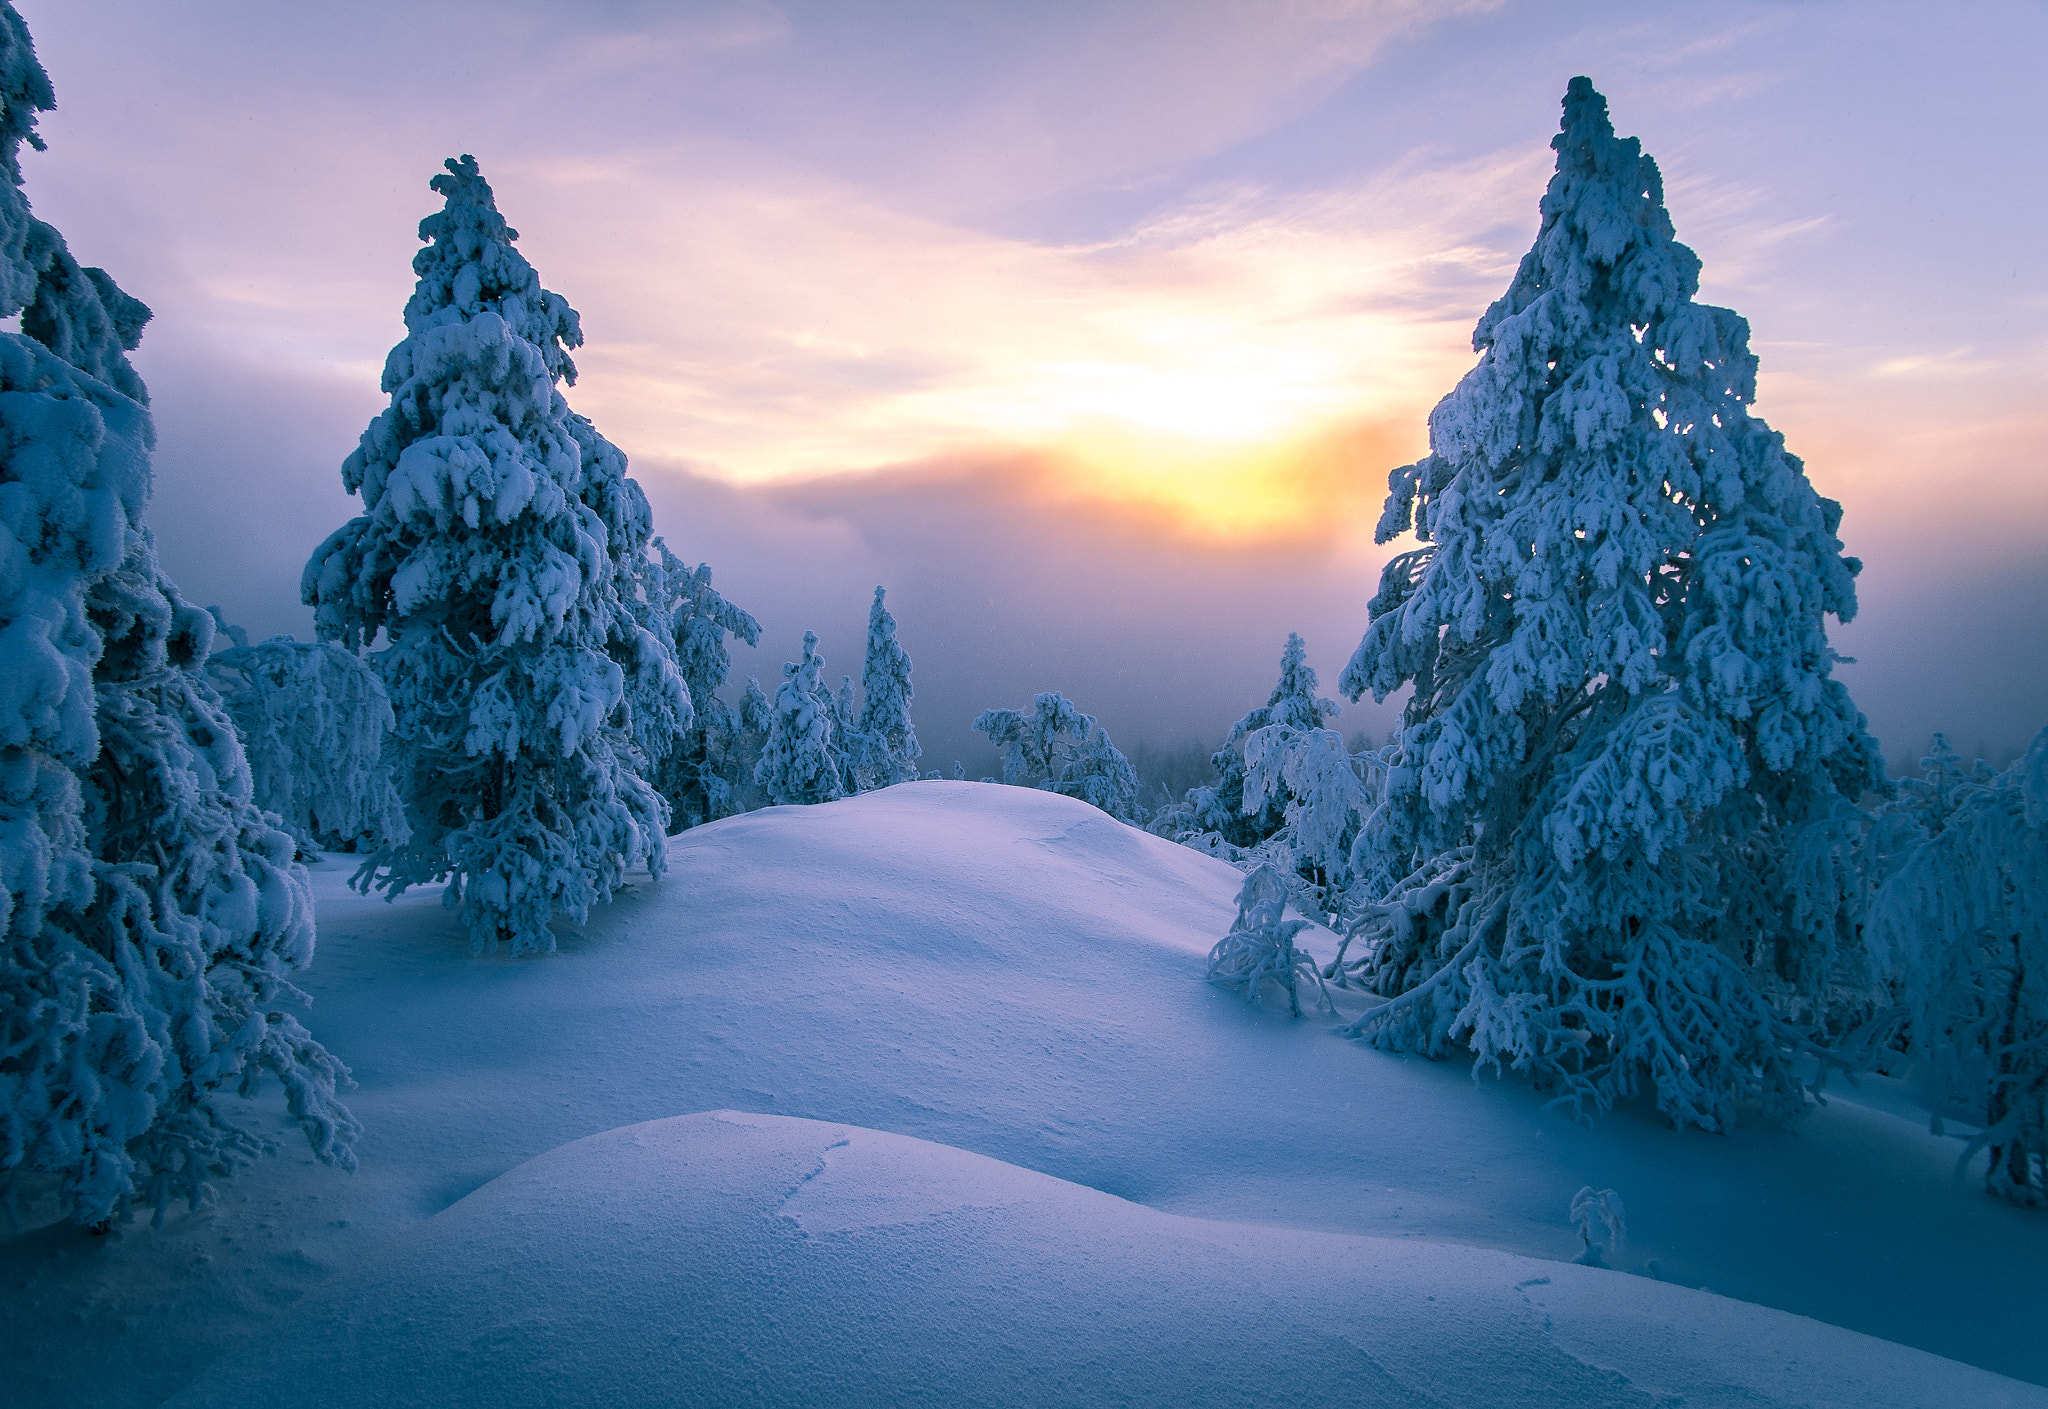 Обои Лапландия снег холмы на рабочий стол